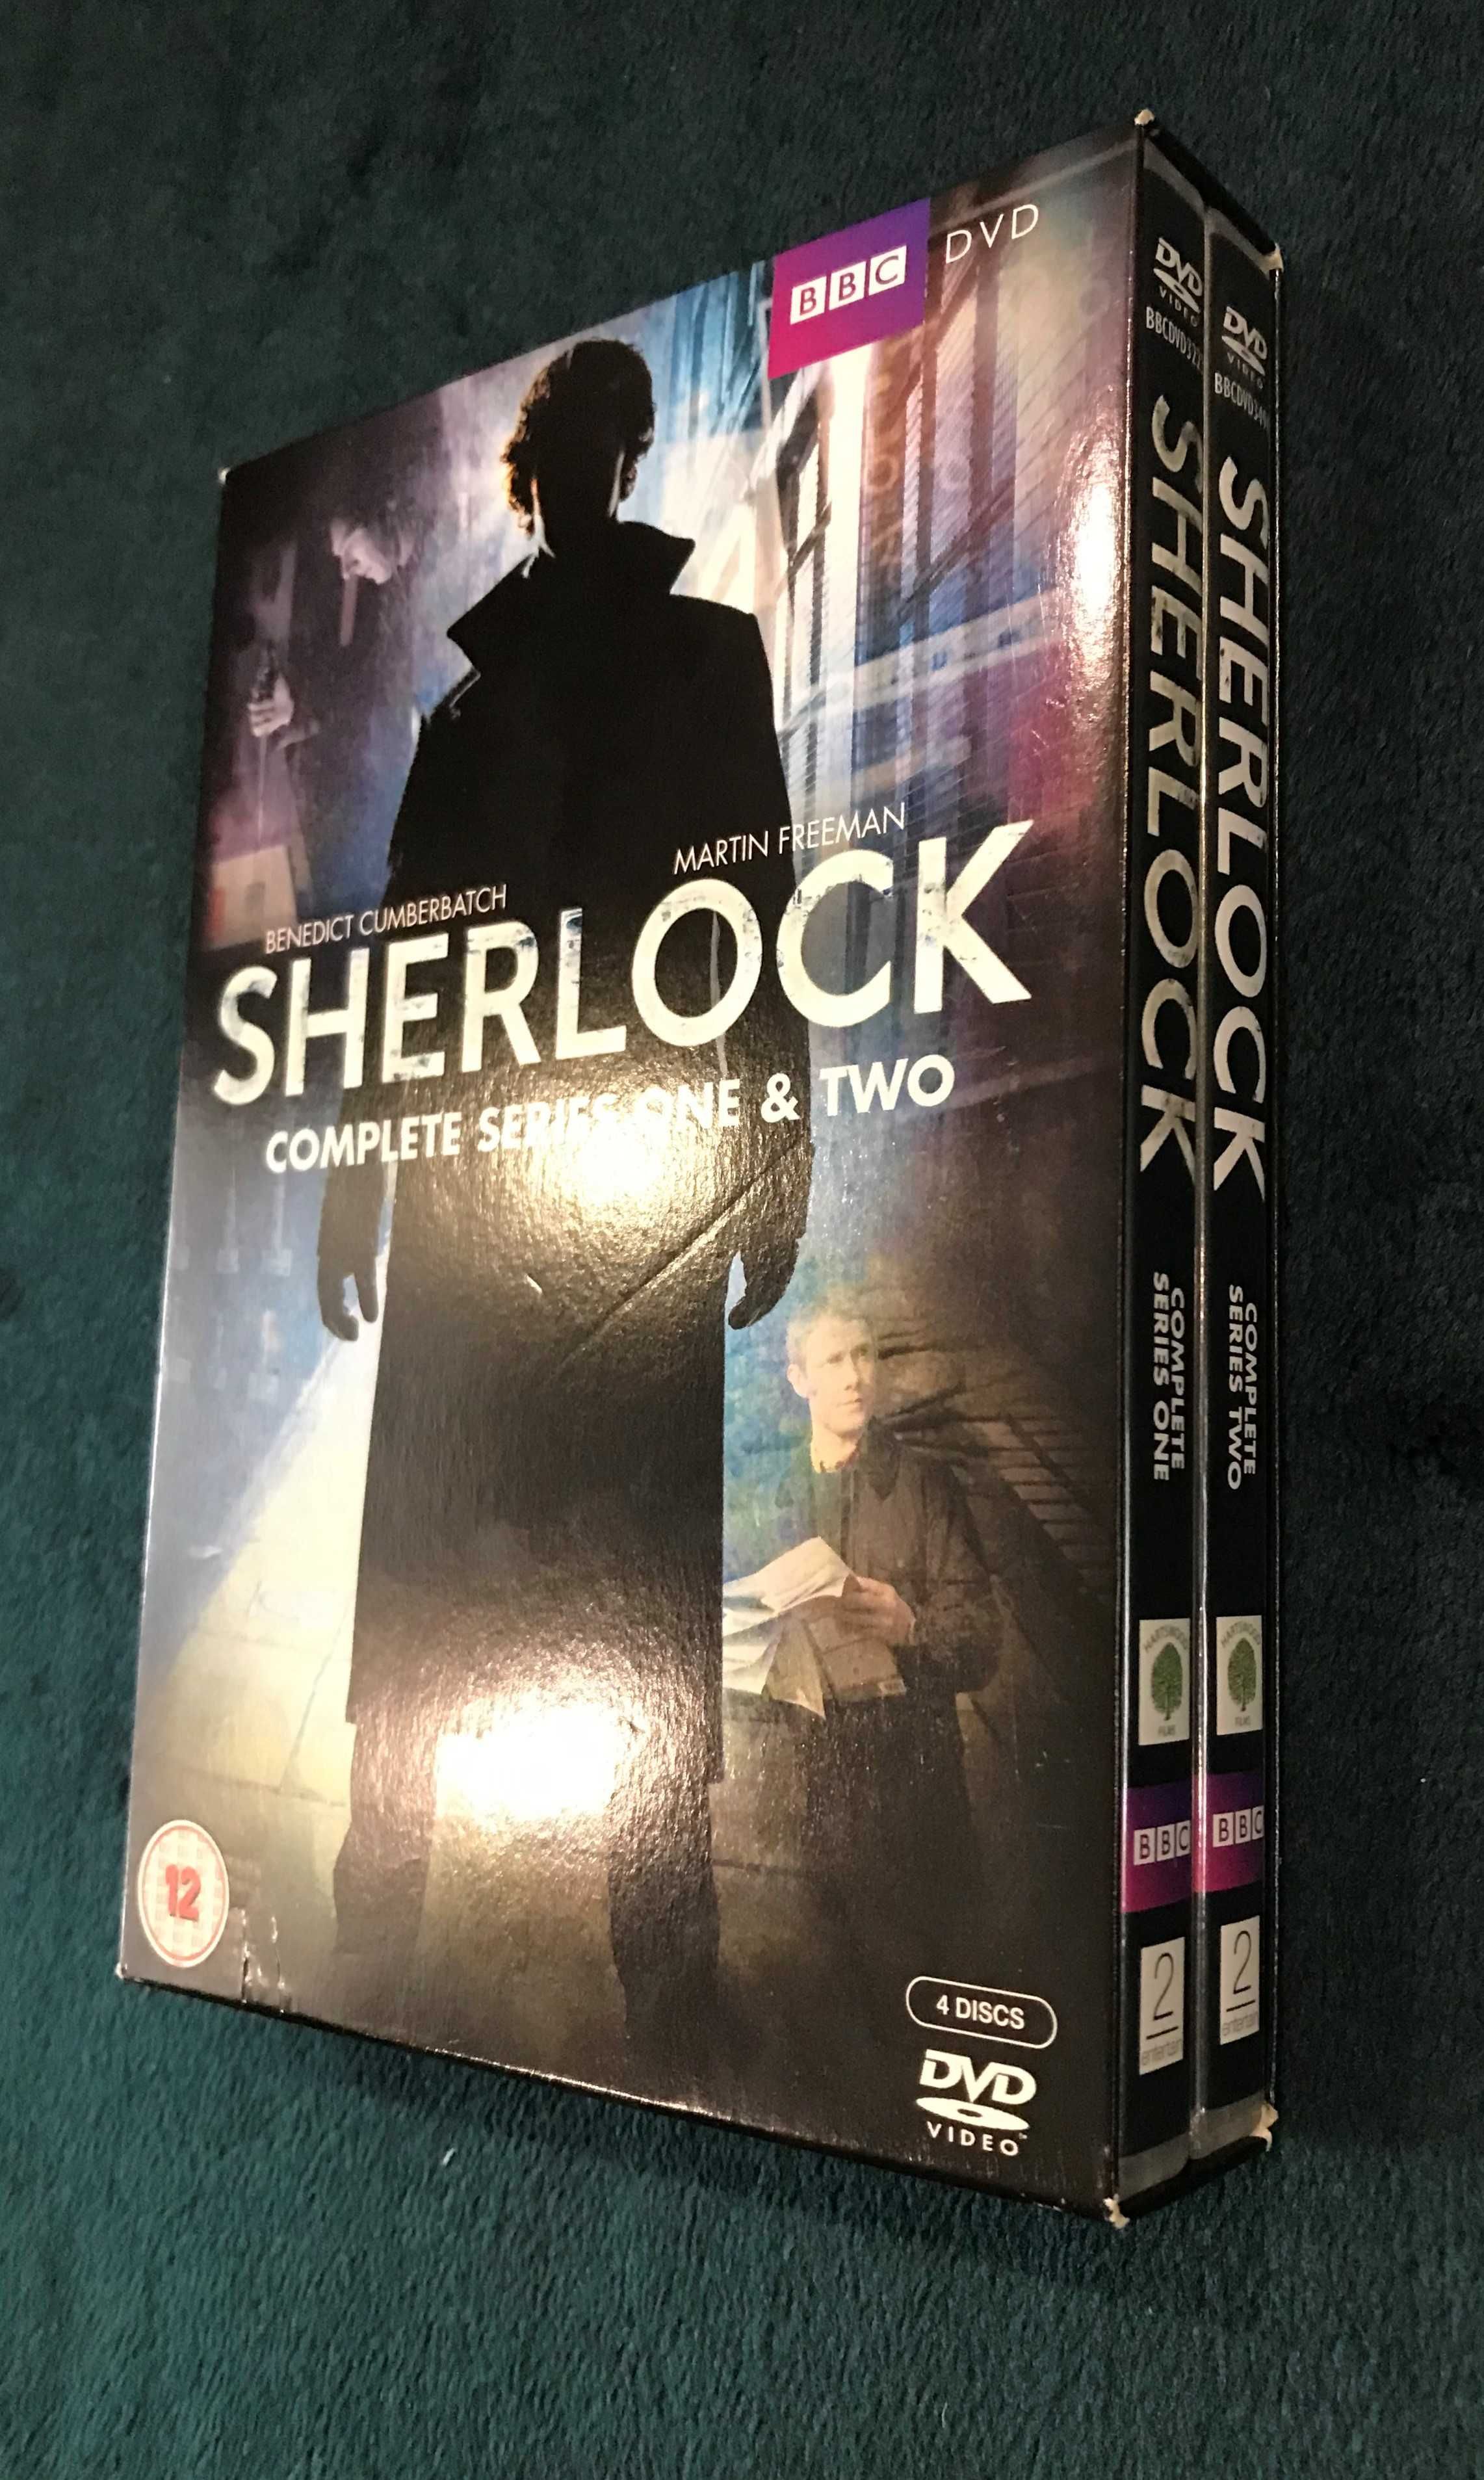 Компакт-диск Sherlock Complete Series One & Two